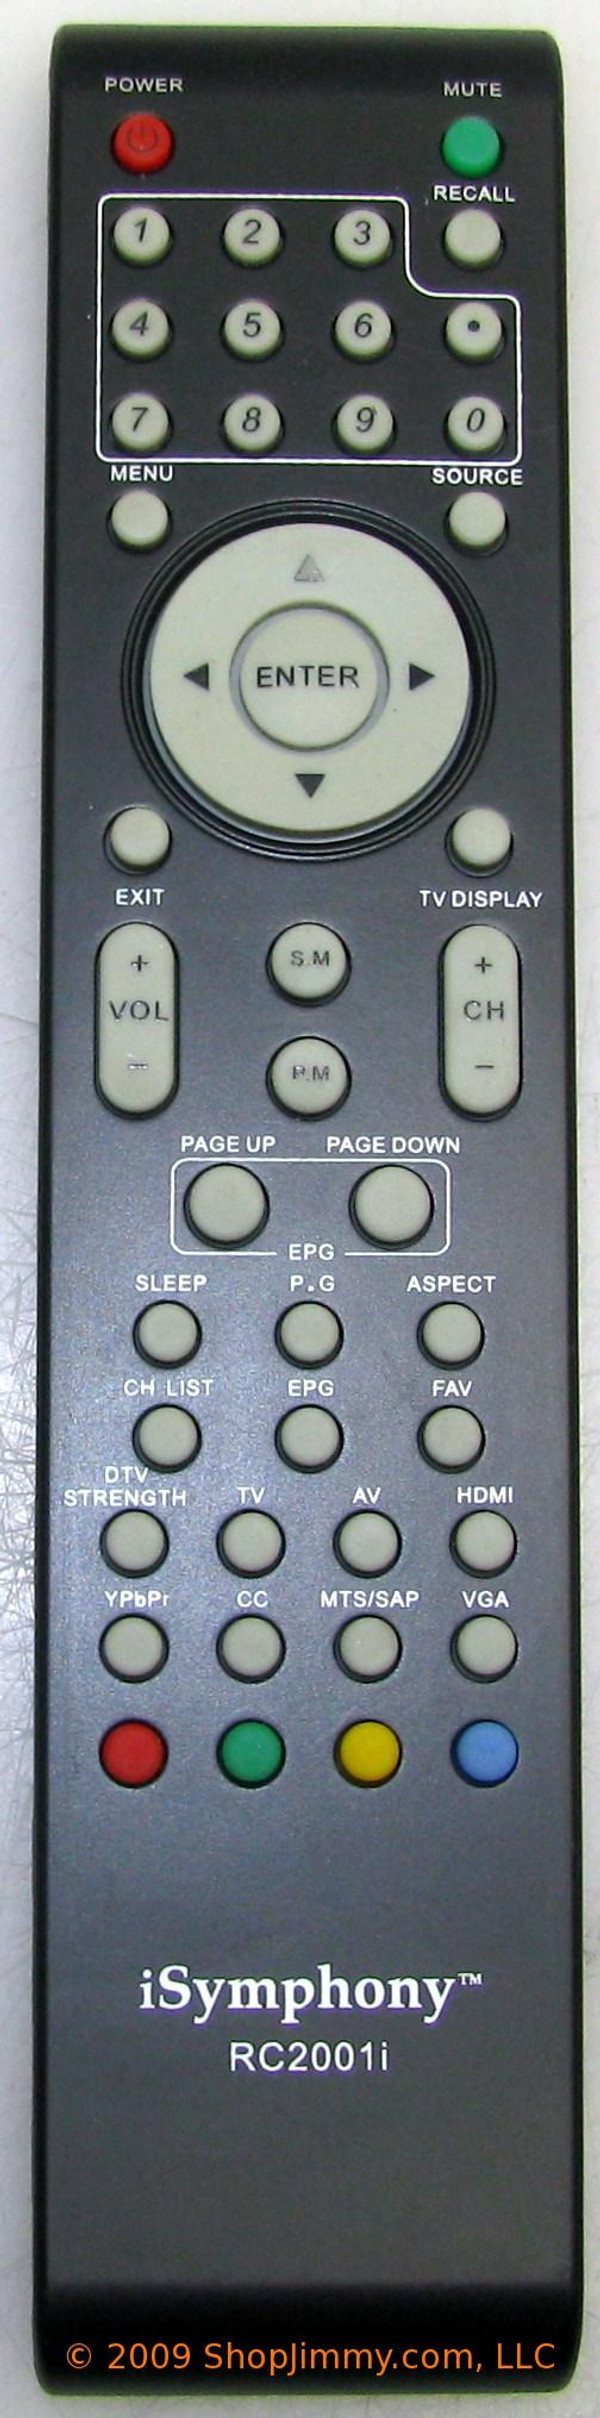 iSymphony RC2001i Remote Control